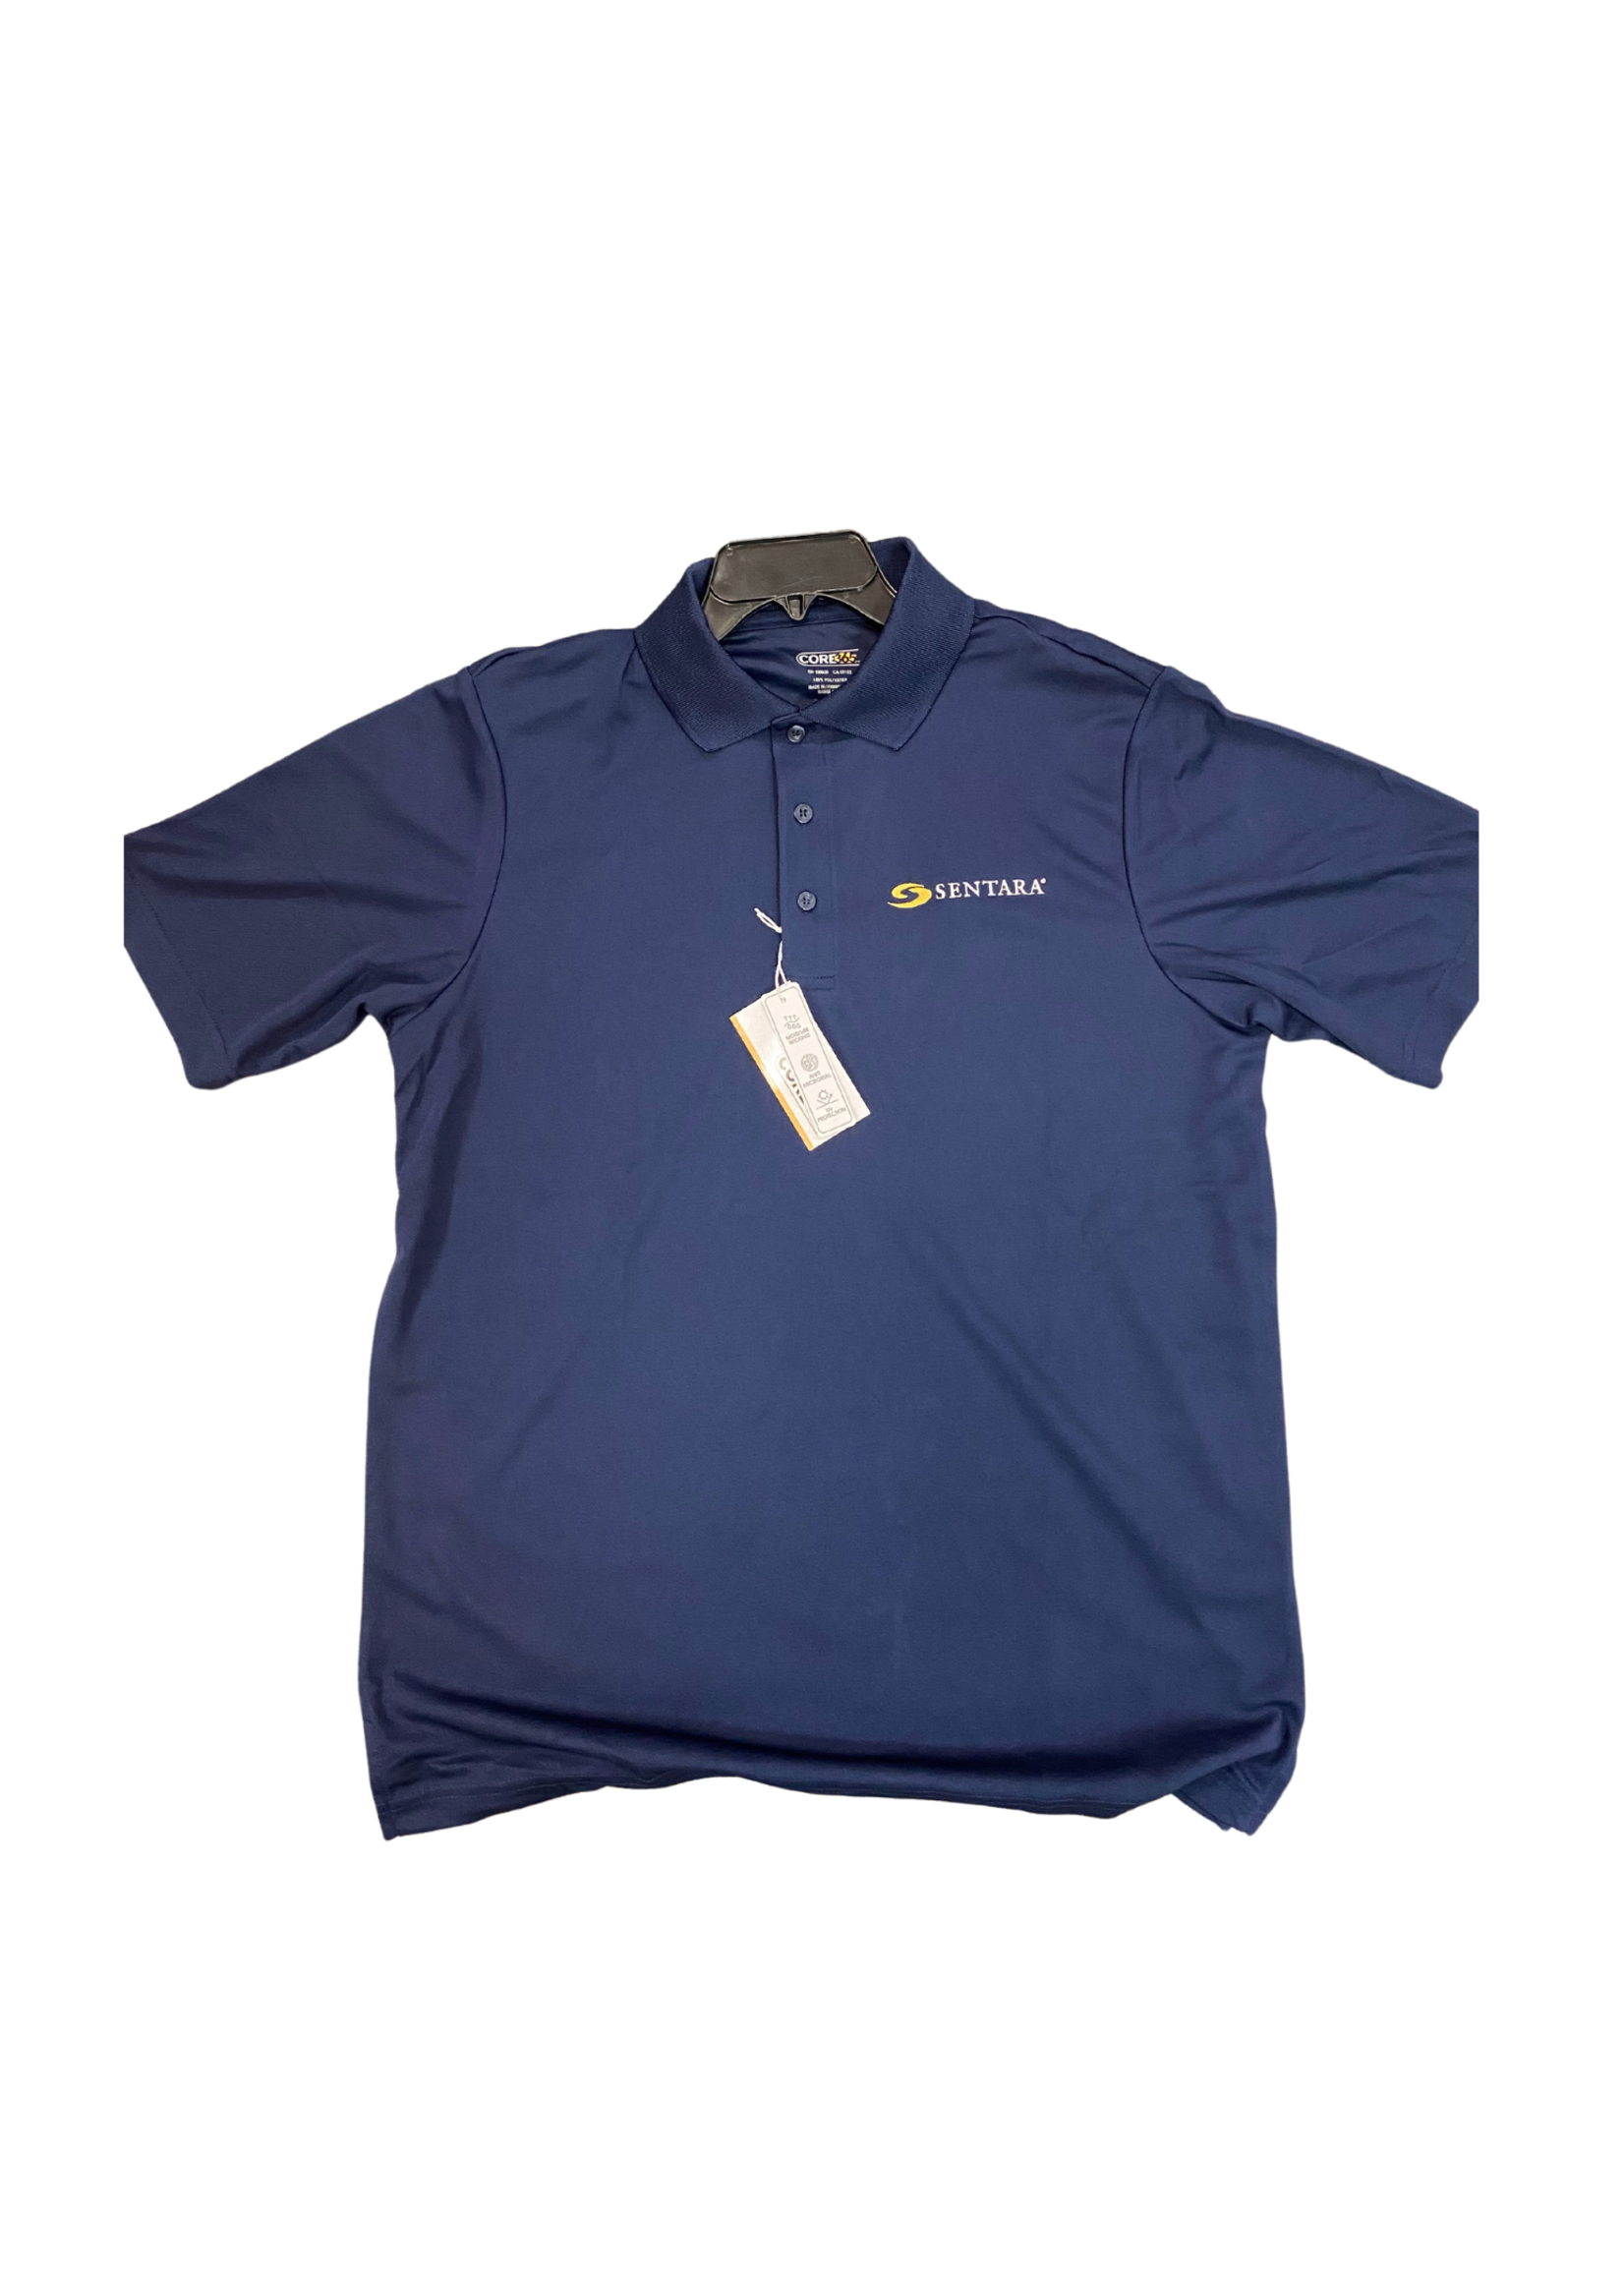 epolos.com Sentara Polo Shirts-100% Polyester